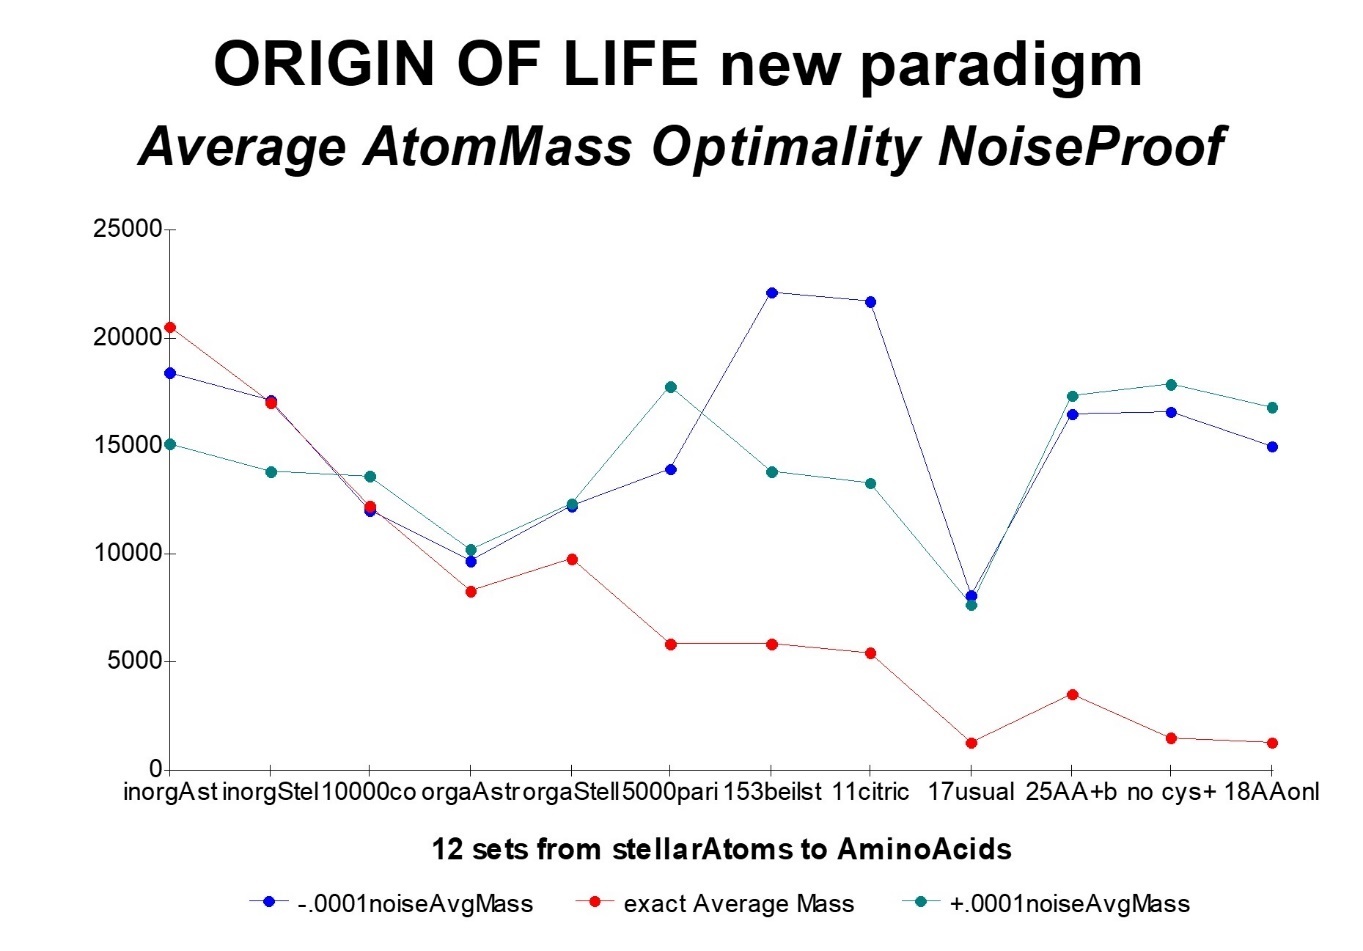  Evidence of noise sensitivity of average atomic masses for 12 sets of organic compounds